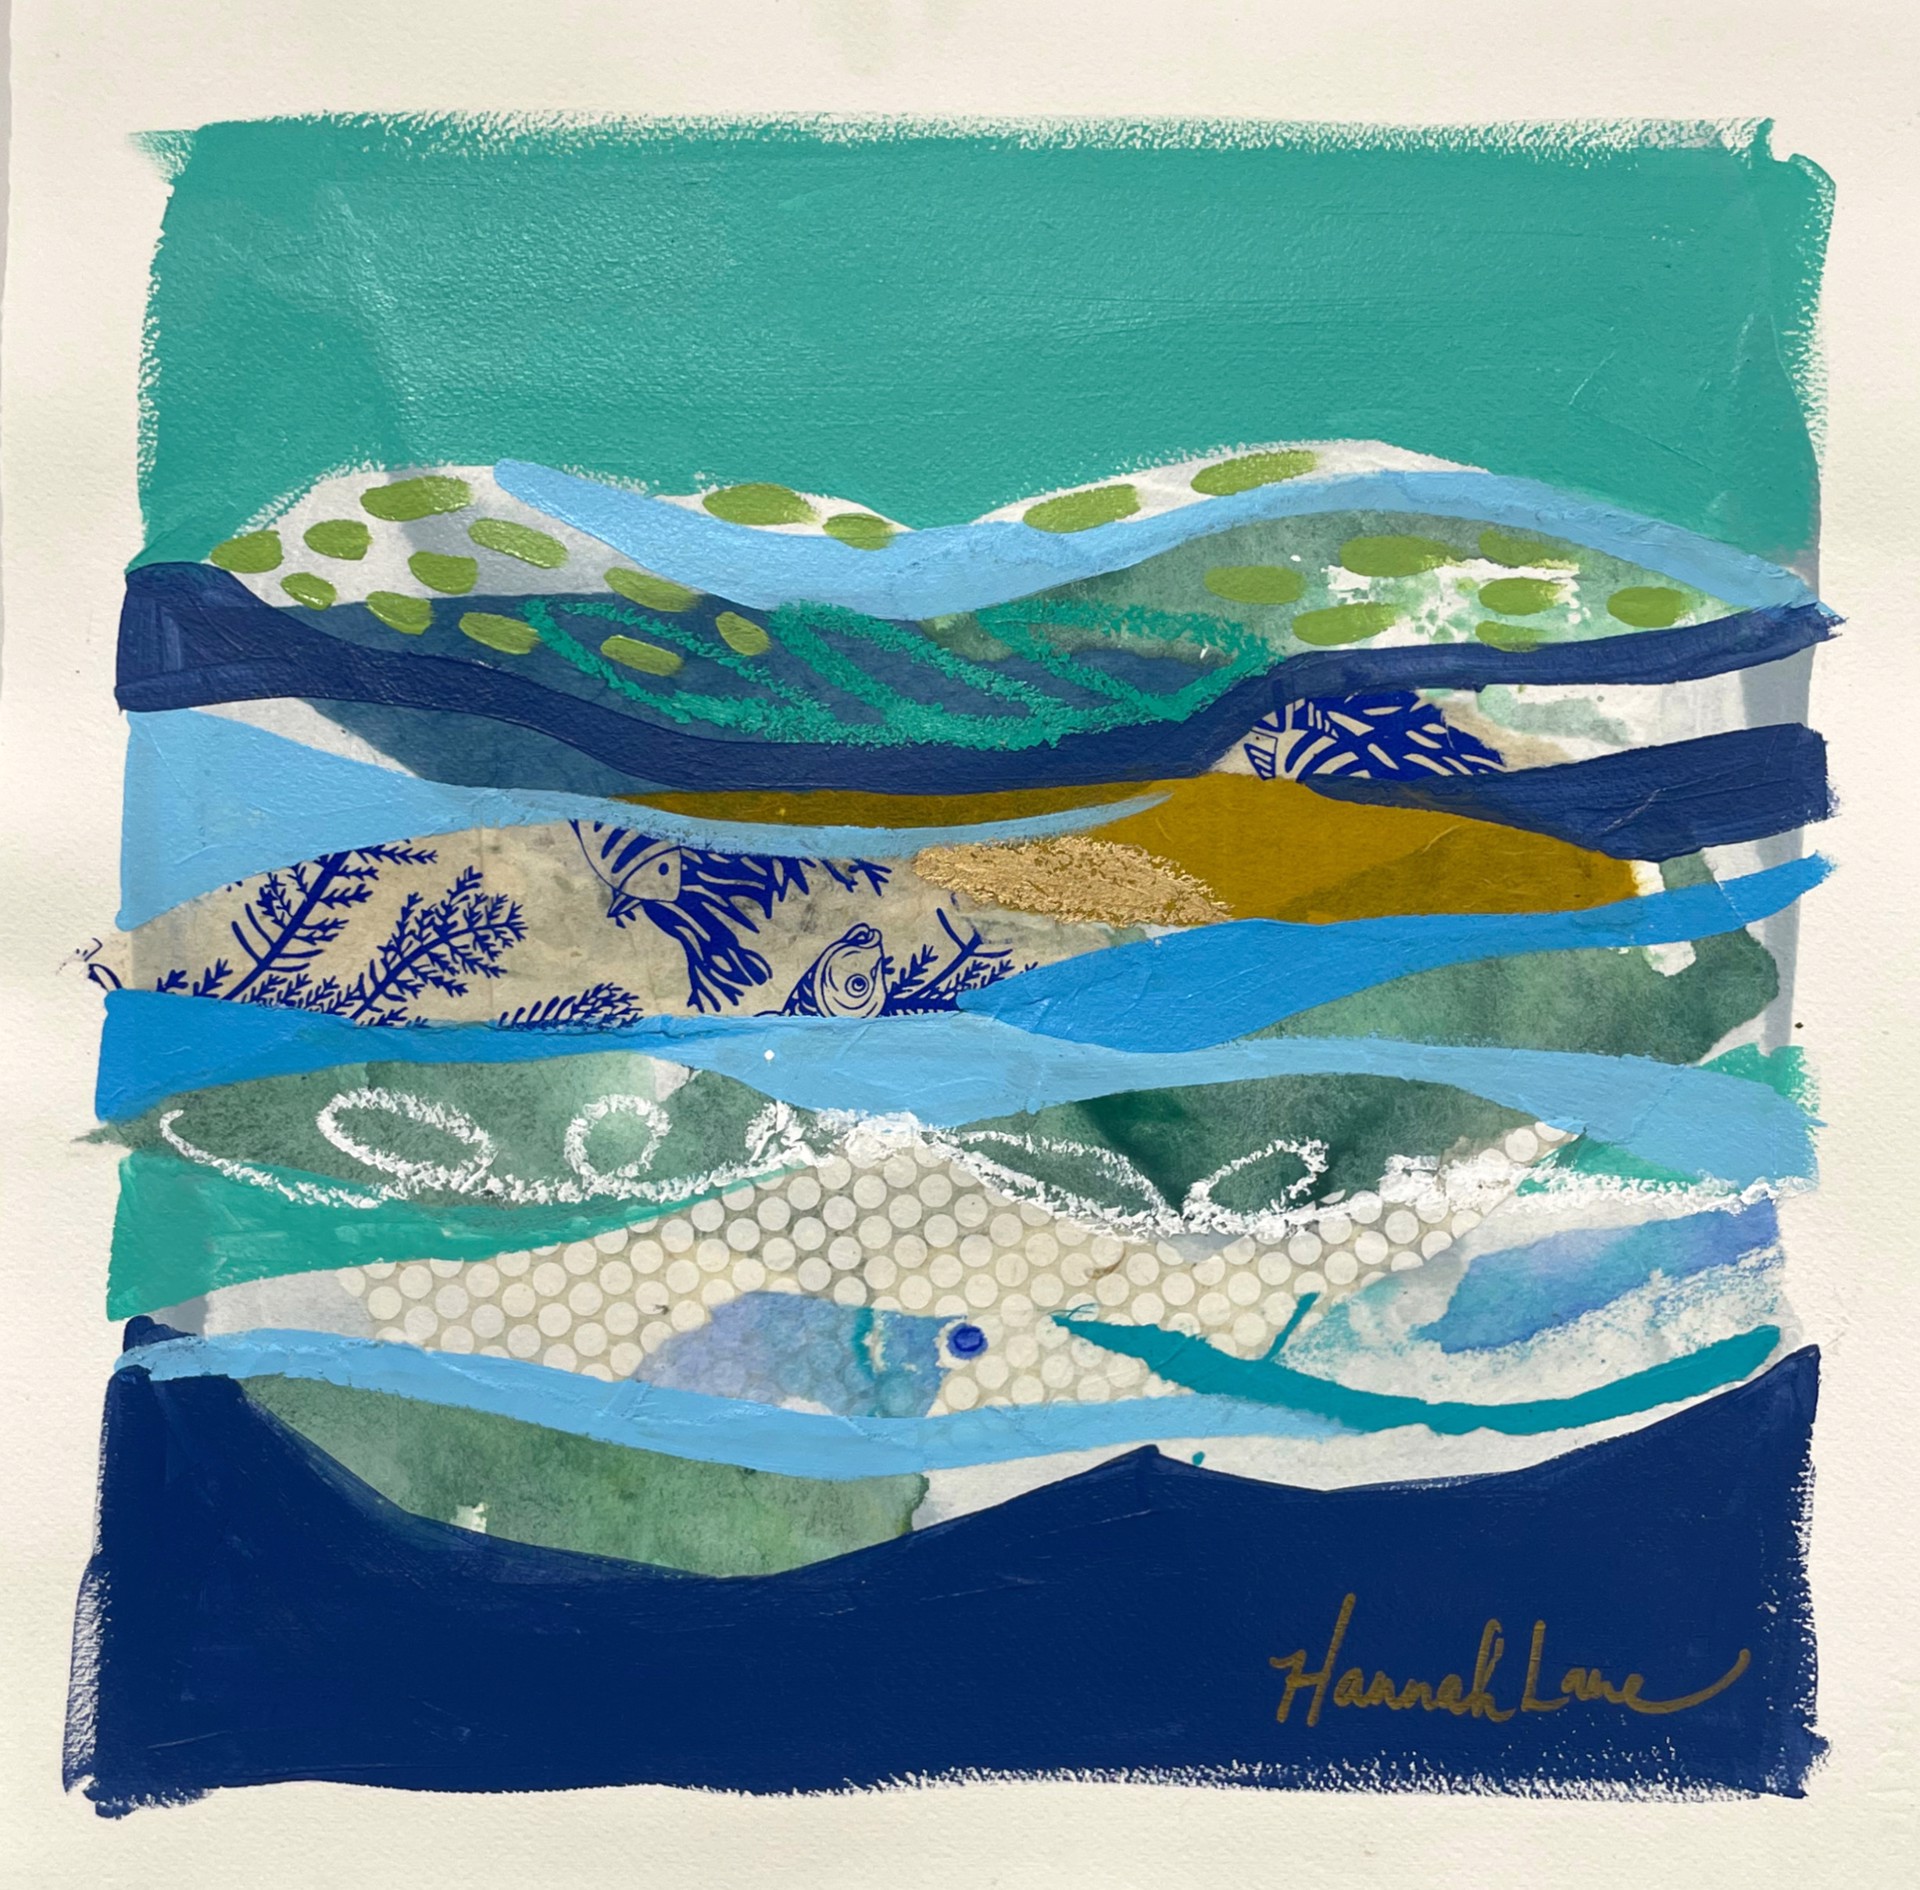 Waves of Sea Salt by Hannah Lane